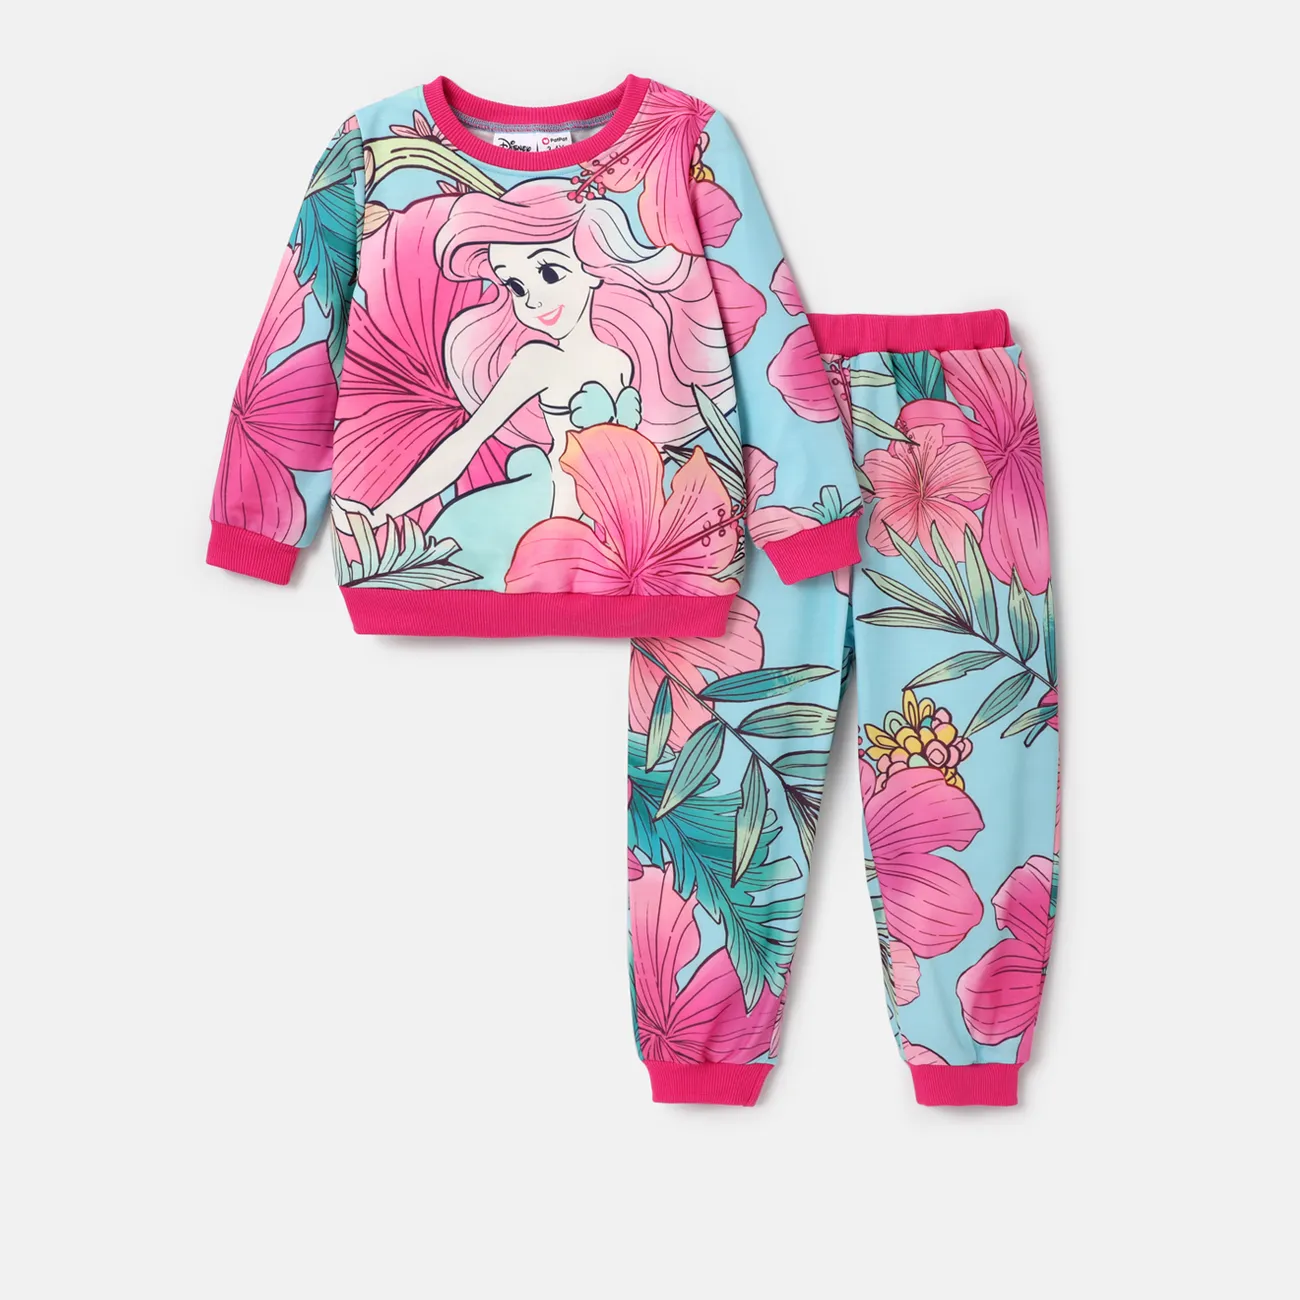 Disney Princess Baby Girl 2pcs Character Print Long-sleeve Top and Pants Set Pink big image 1